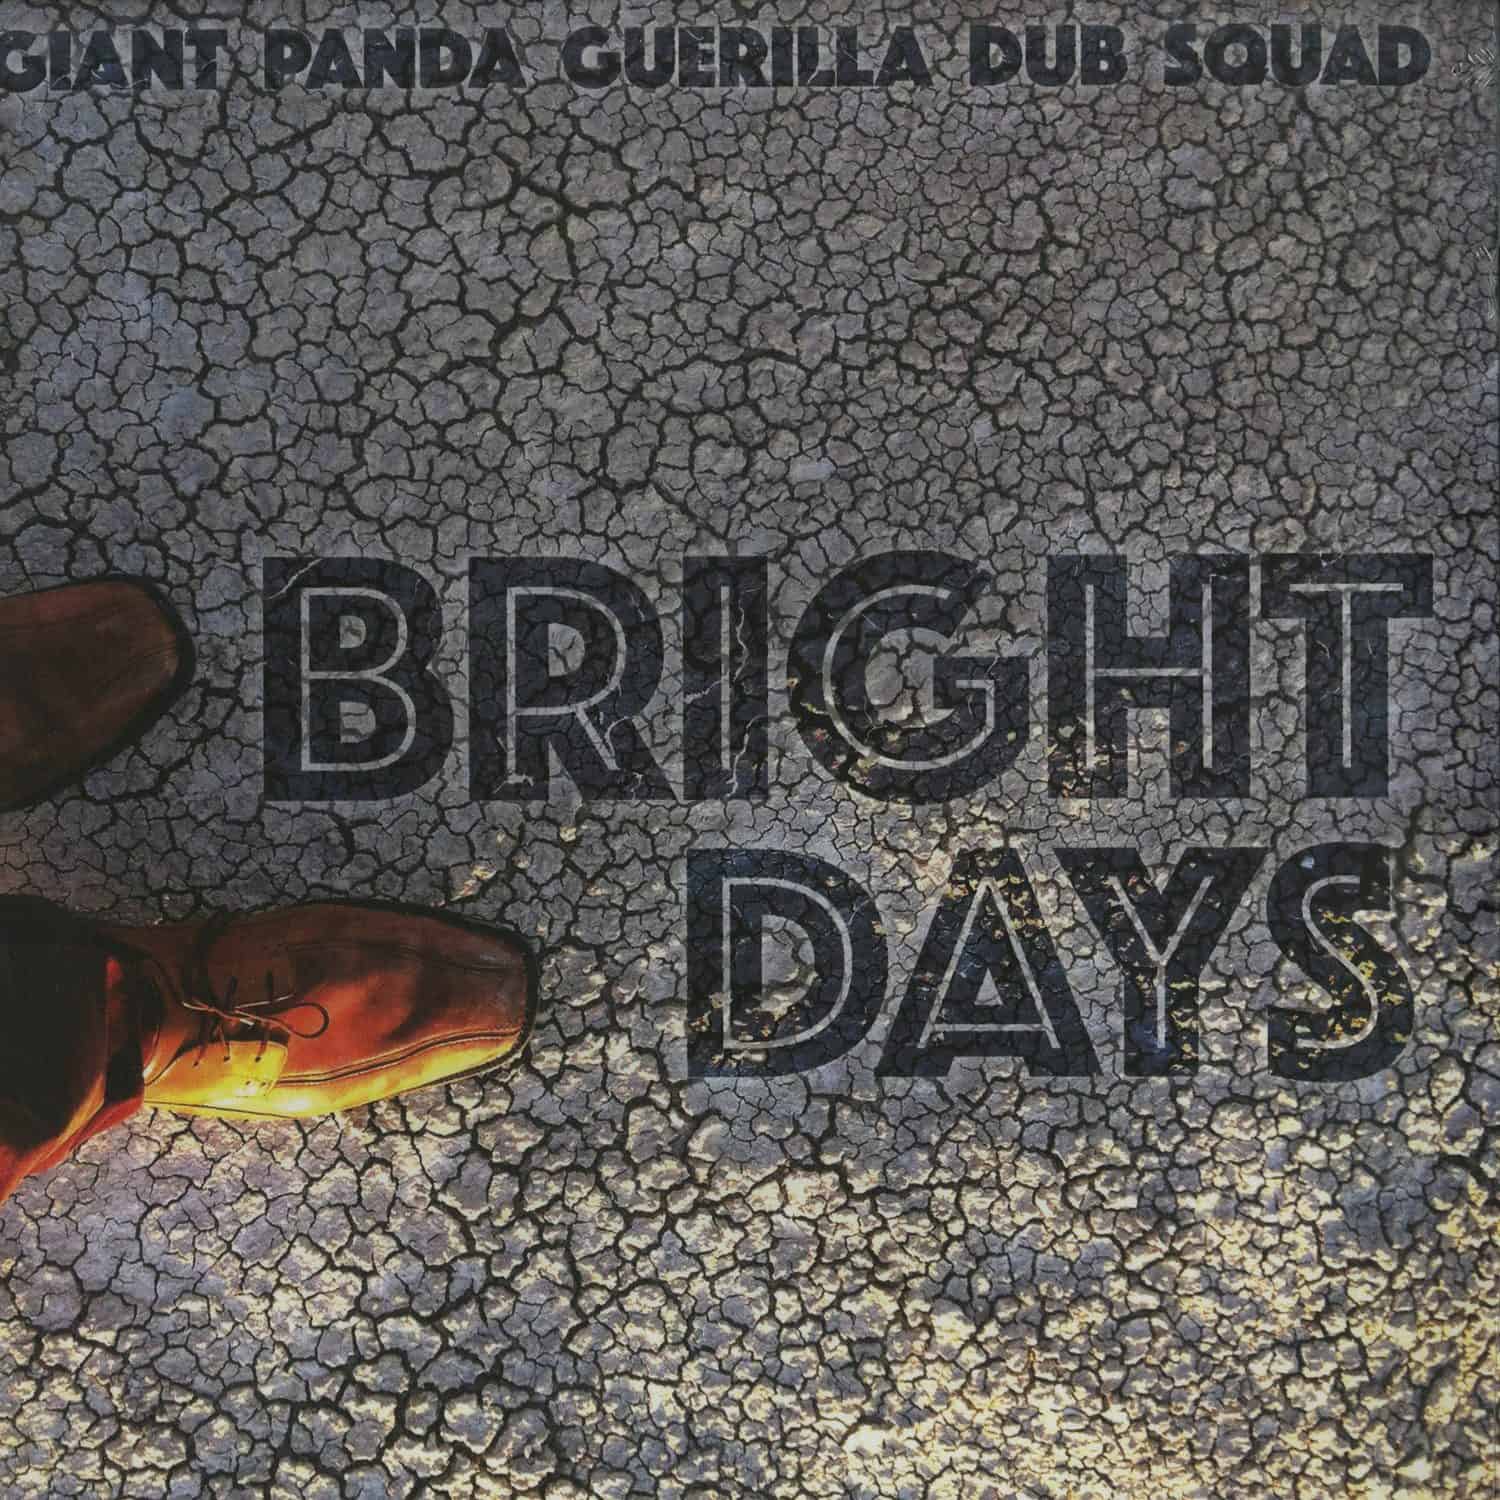 Giant Panda Guerilla Dub Squad - BRIGHT DAYS 